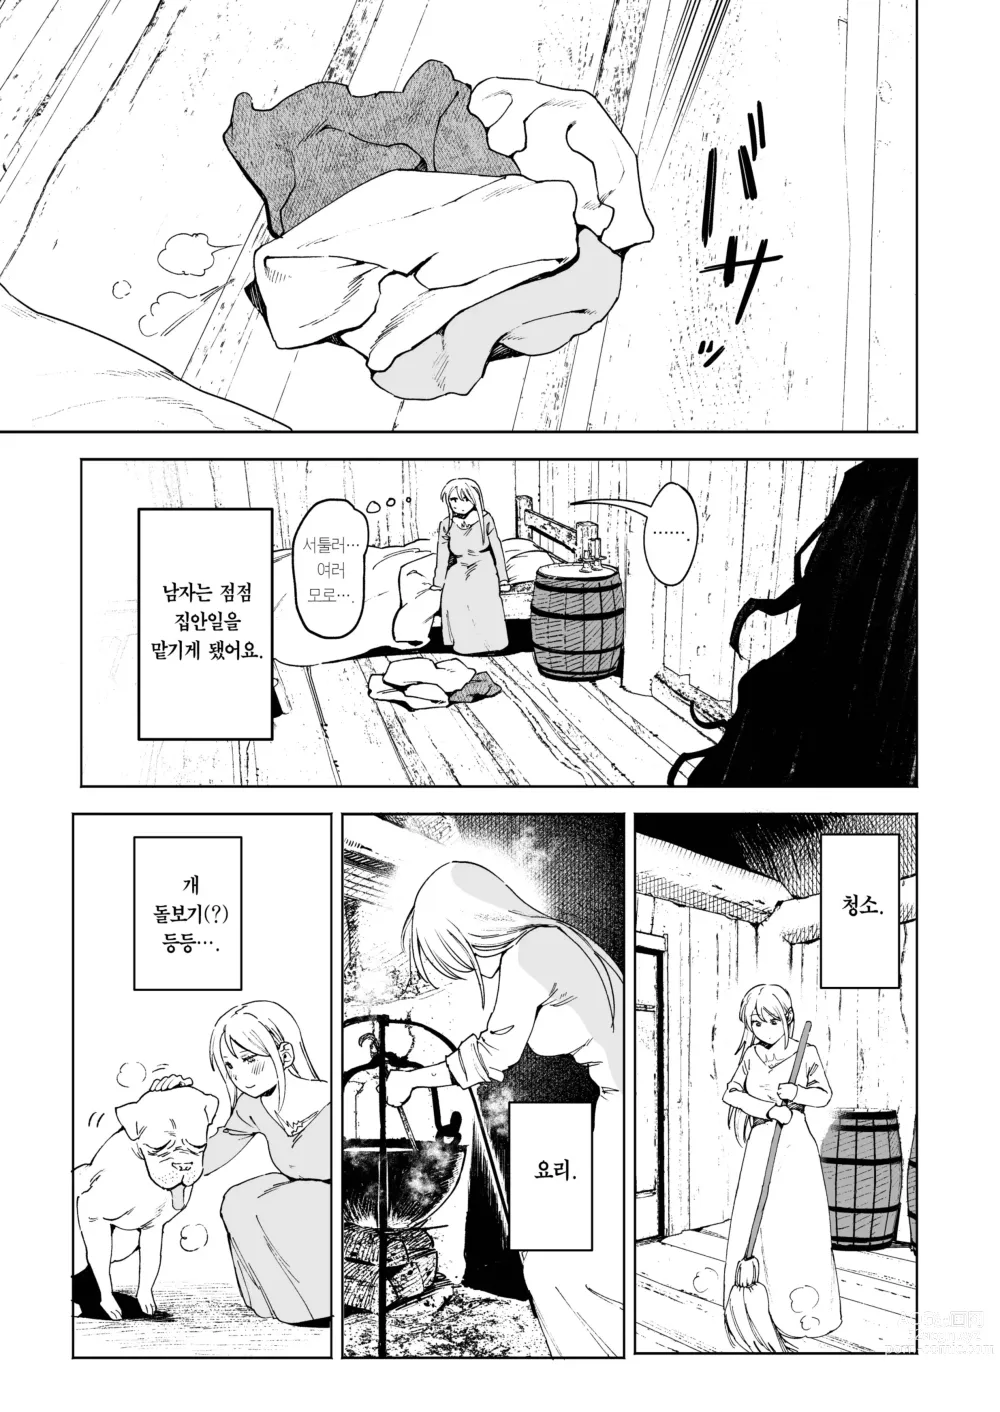 Page 17 of doujinshi 메이든 ~기사였던 사냥꾼이 창녀를 주운 이야기~